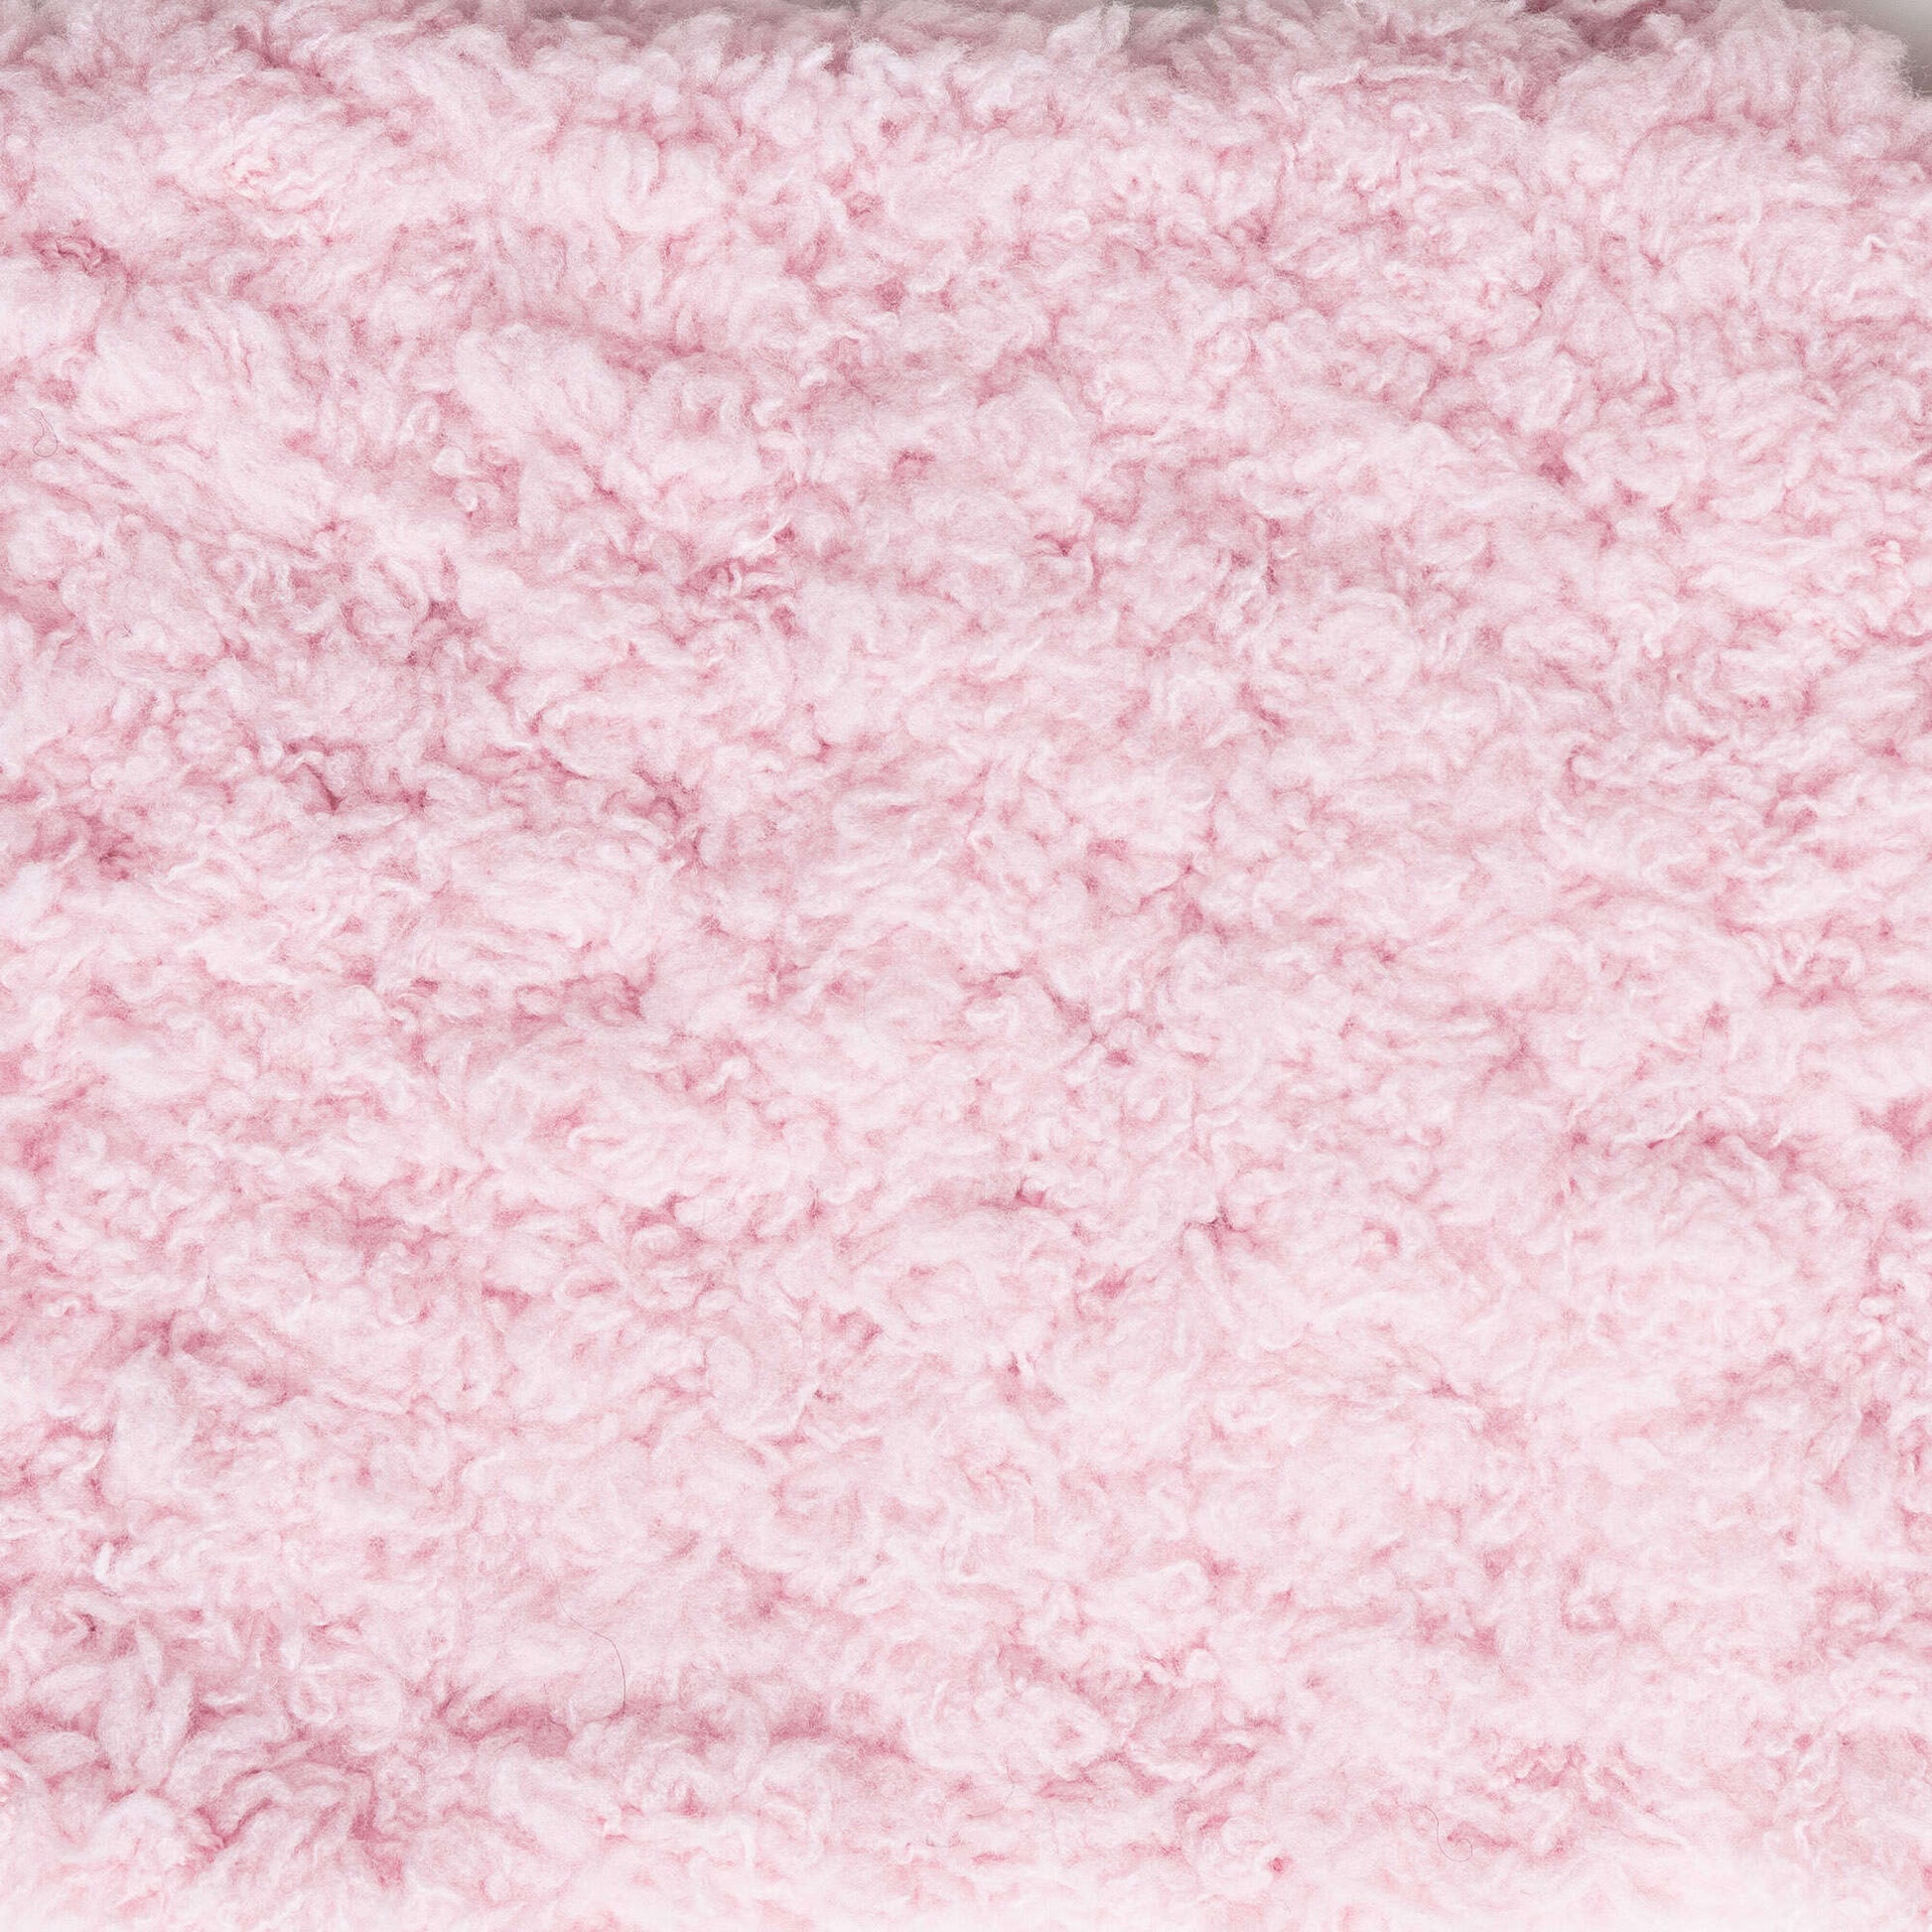 Bernat® Pipsqueak™ #5 Bulky Polyester Yarn, Vanilla 8.8oz/250g, 254 Yards 